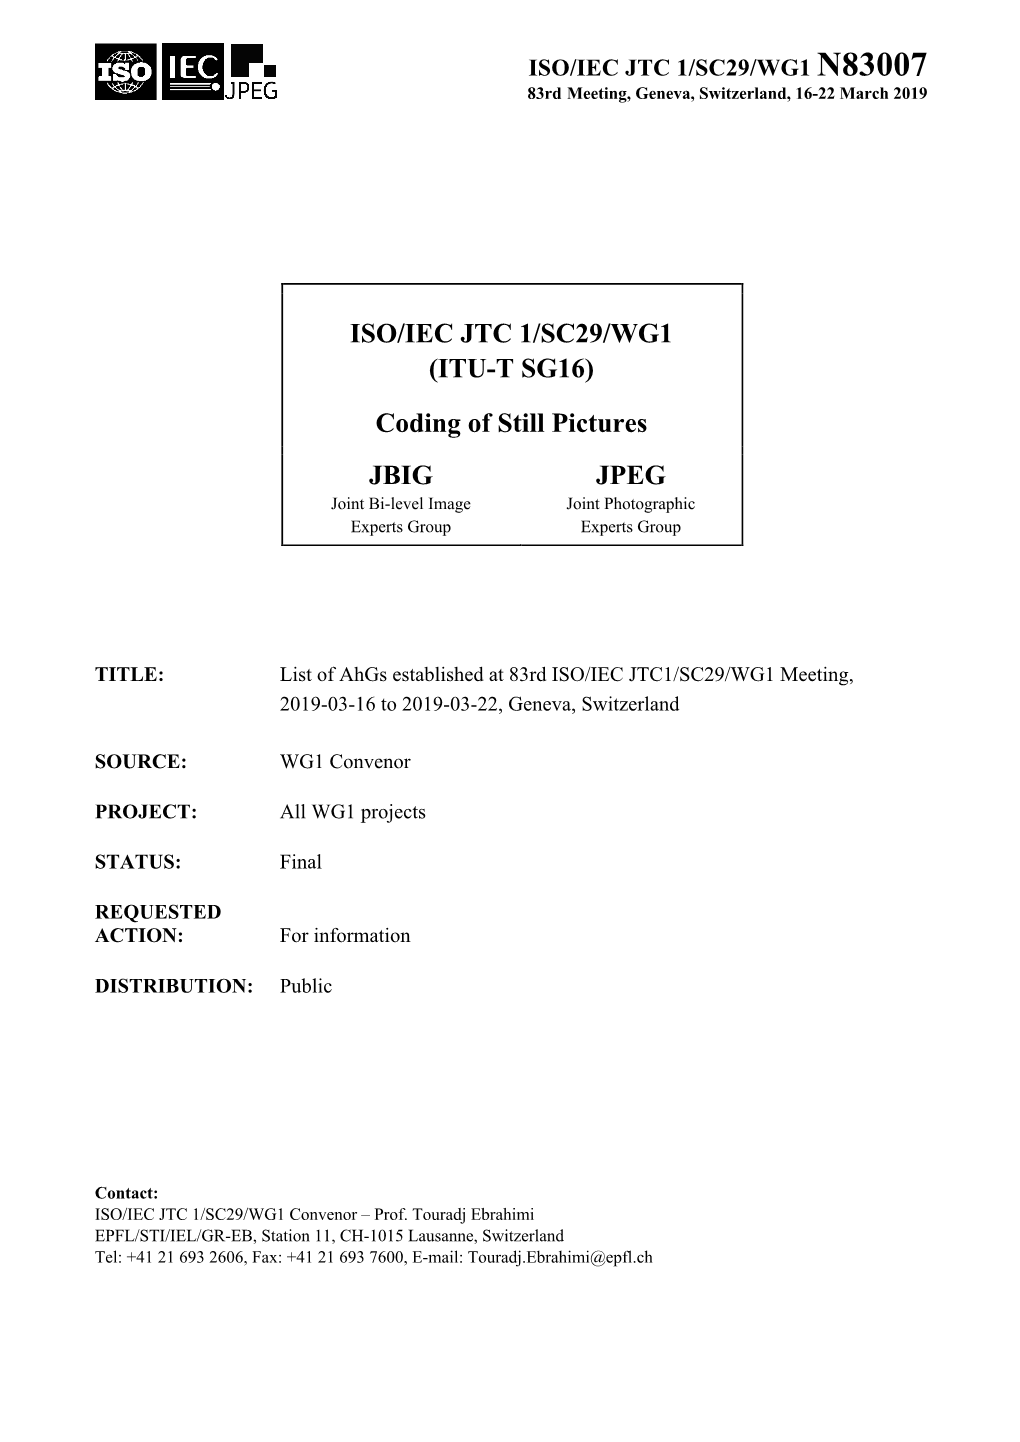 Wg1n83007-CONV-List of Ahgs Established at 83Rd JPEG Meeting